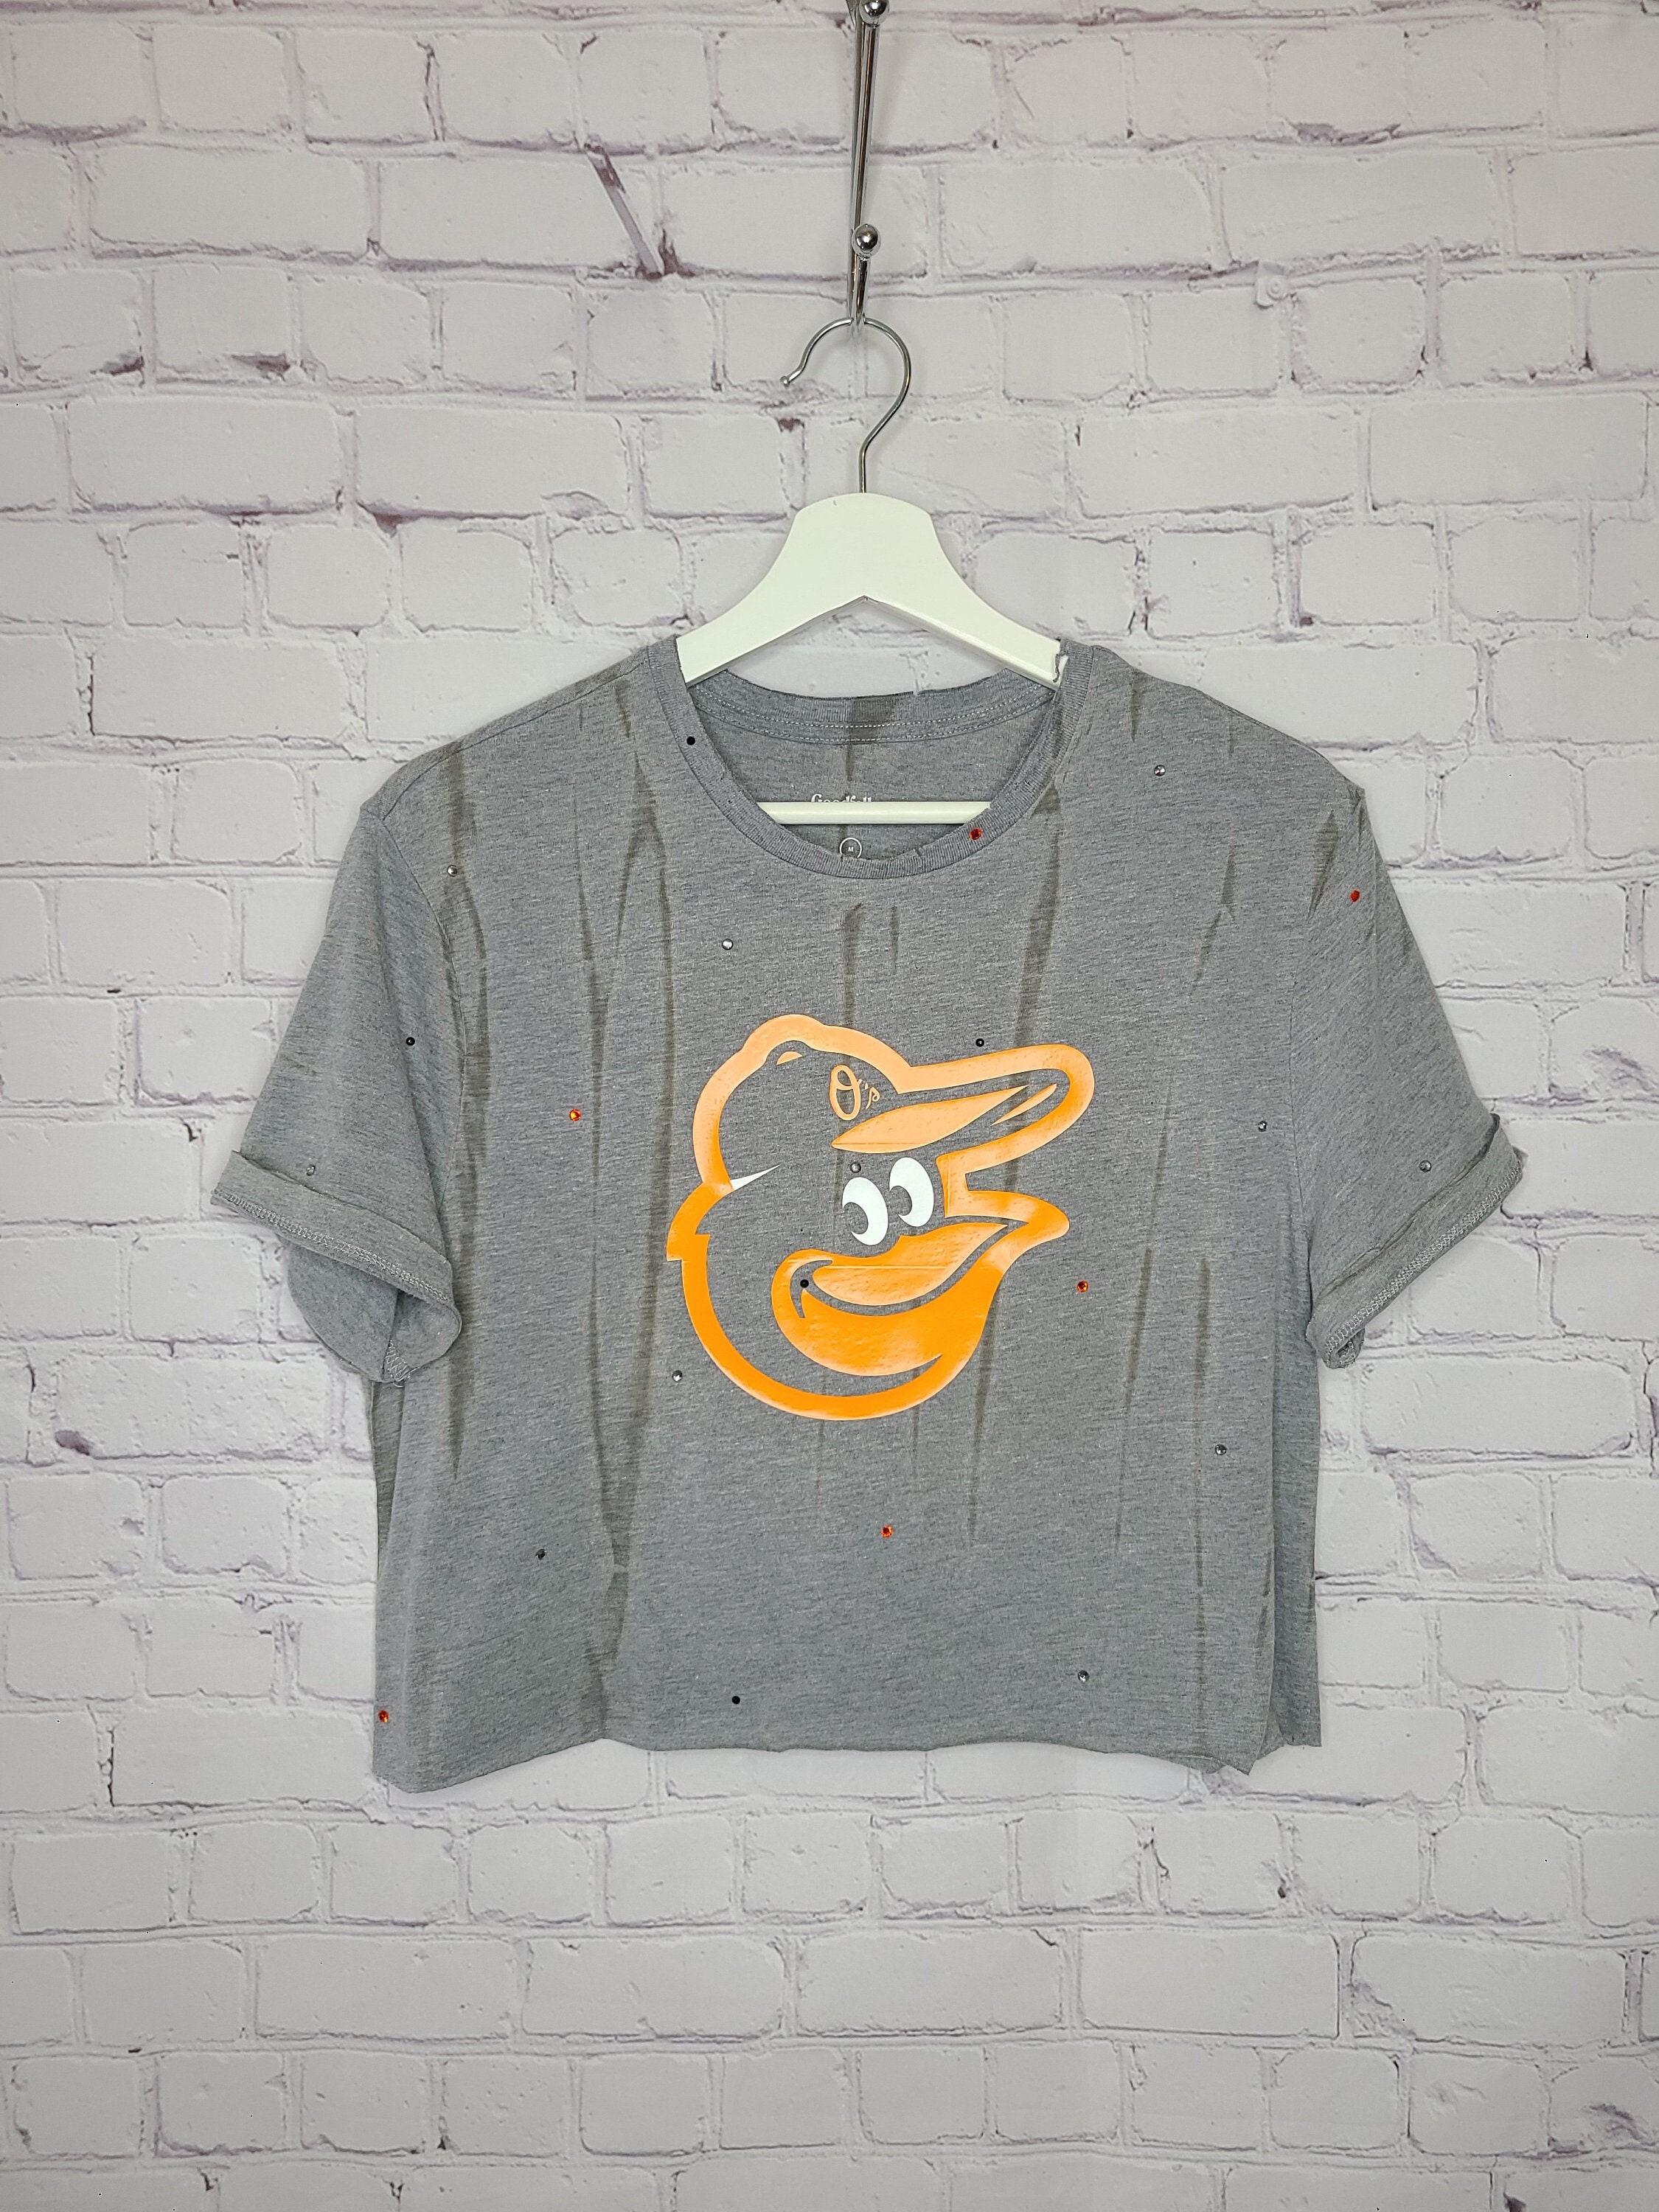 CustomCat Baltimore Orioles Retro MLB Tie-Dye Shirt SpiderOrange / M